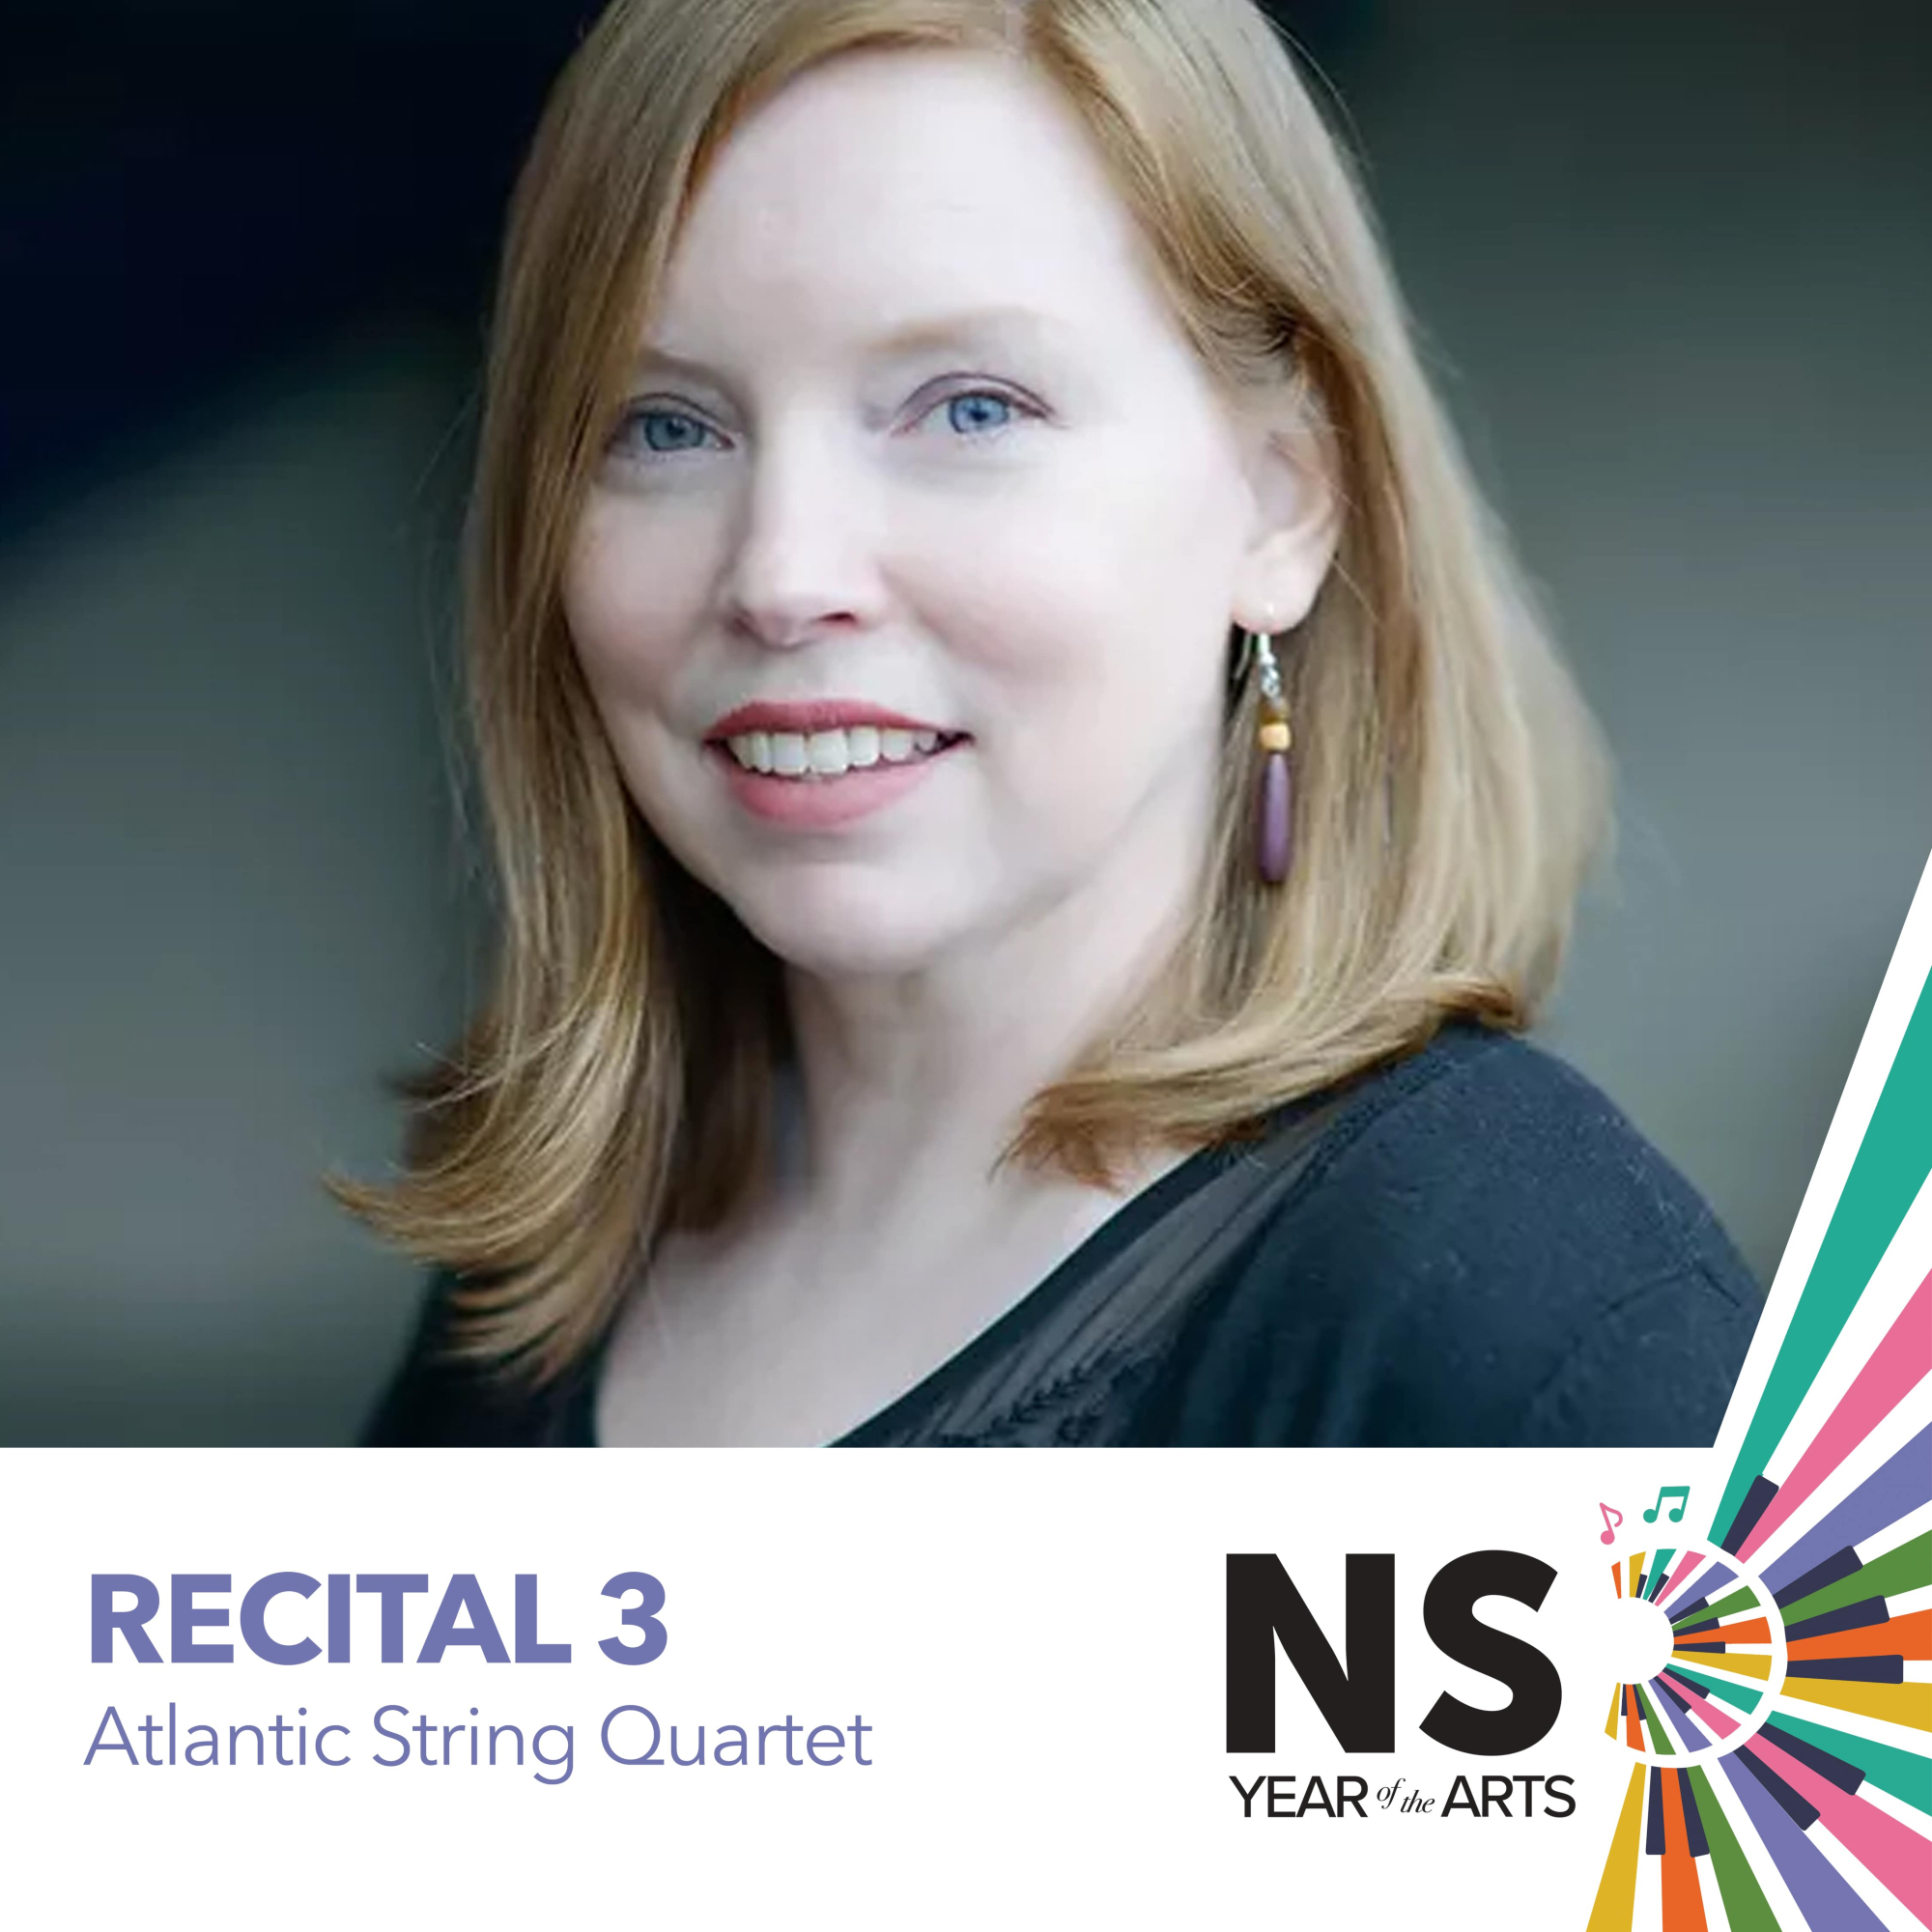 Recital 3 – Atlantic String Quartet